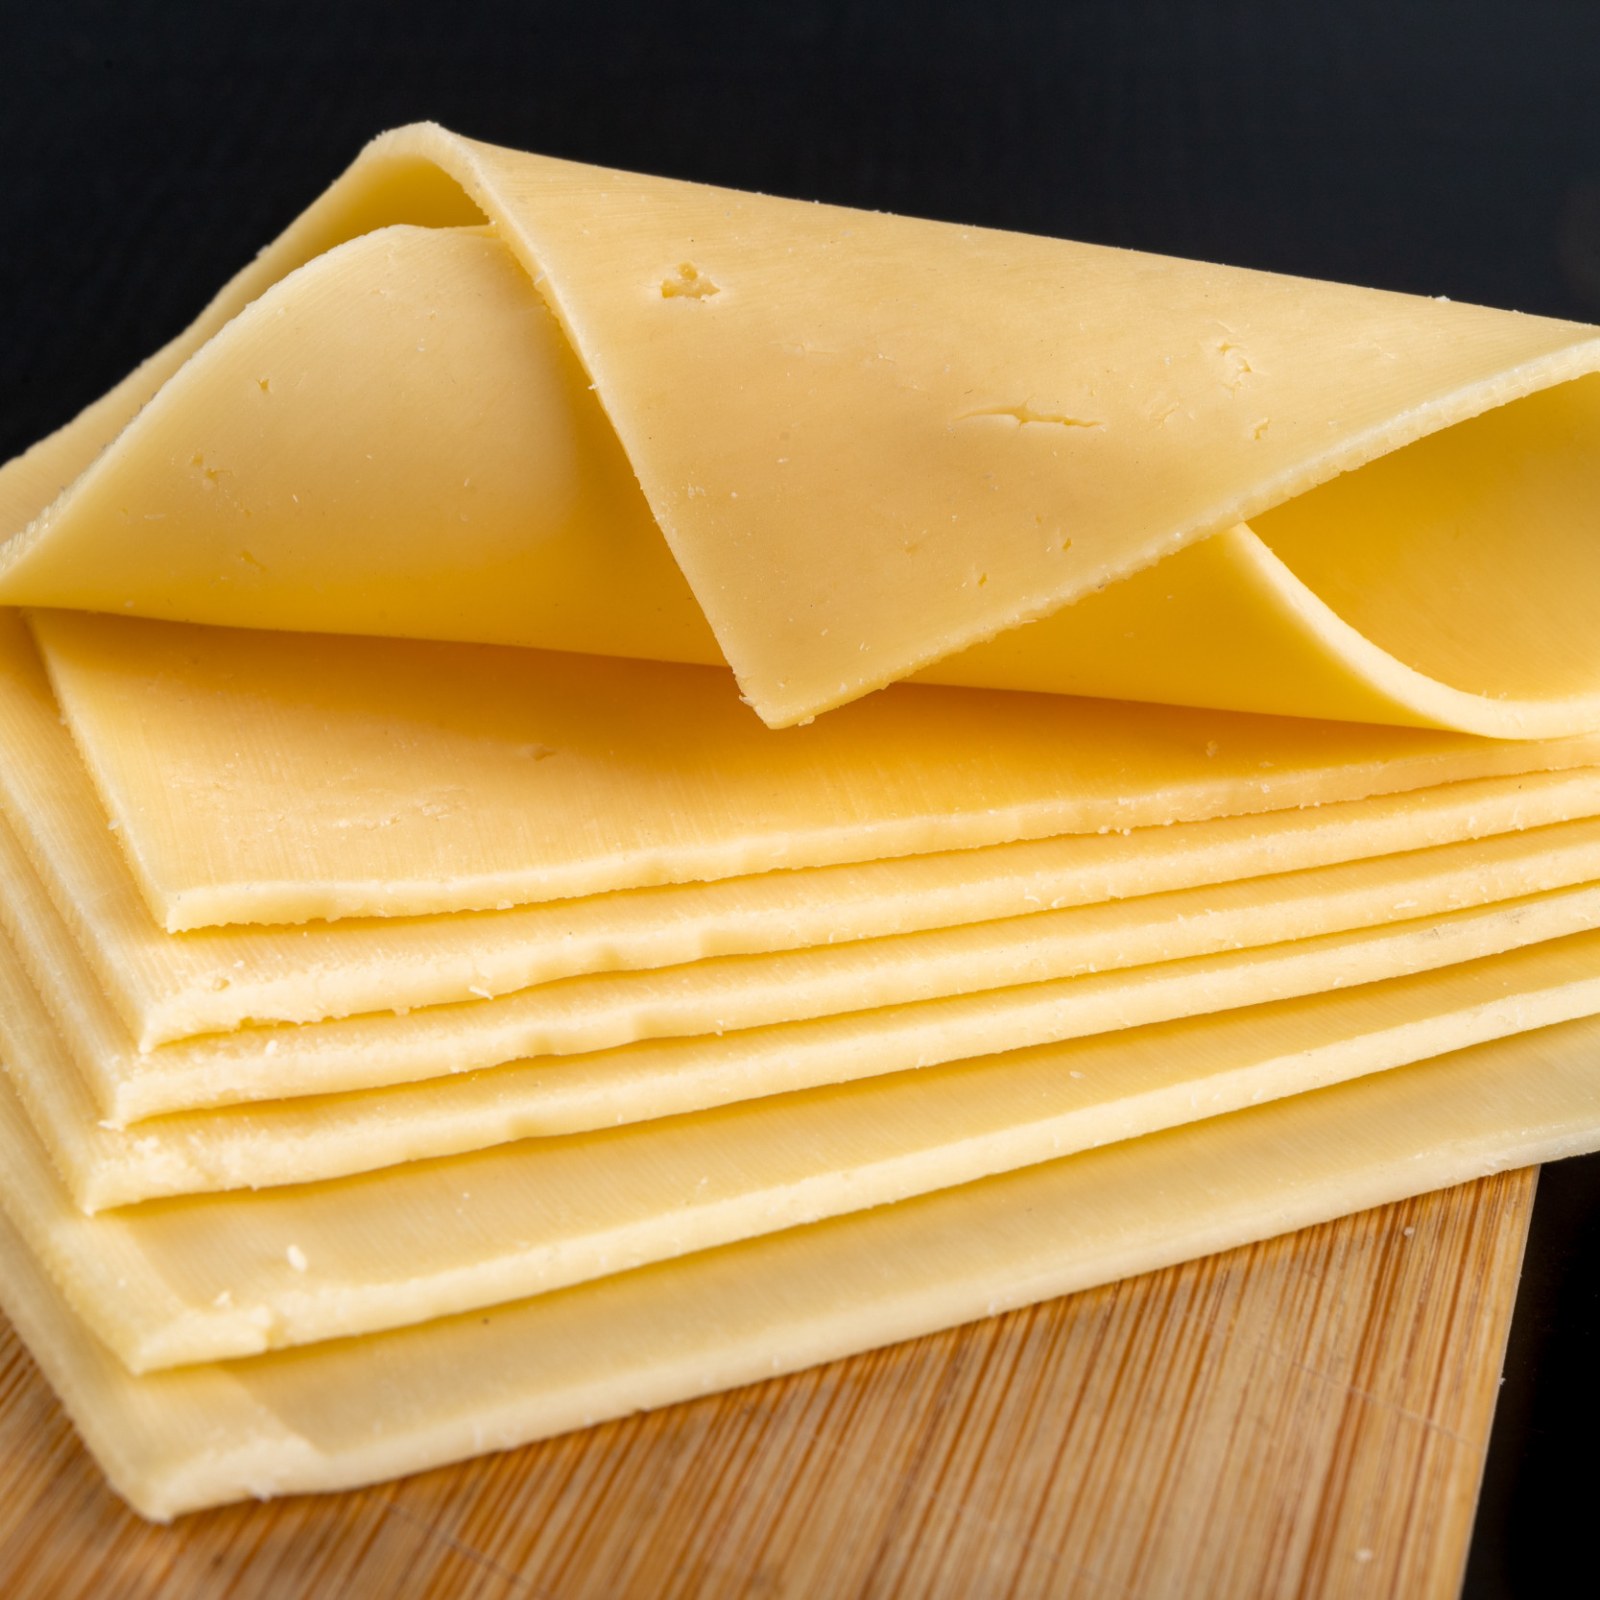 Costco Recalls Tillamook Cheese Due to Potential Plastic Contamination